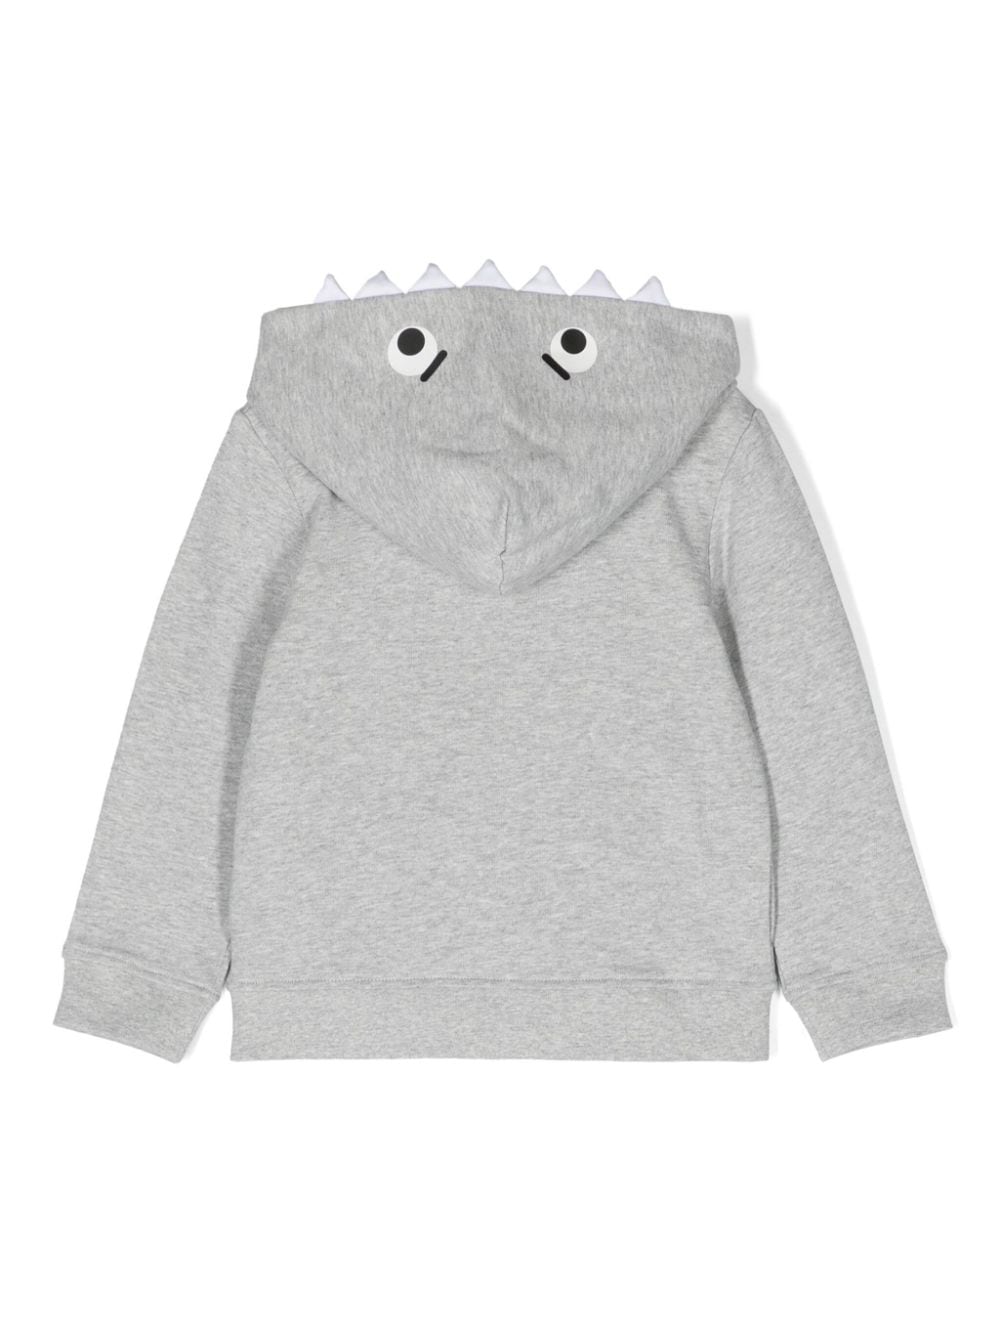 Gray sweatshirt for boys